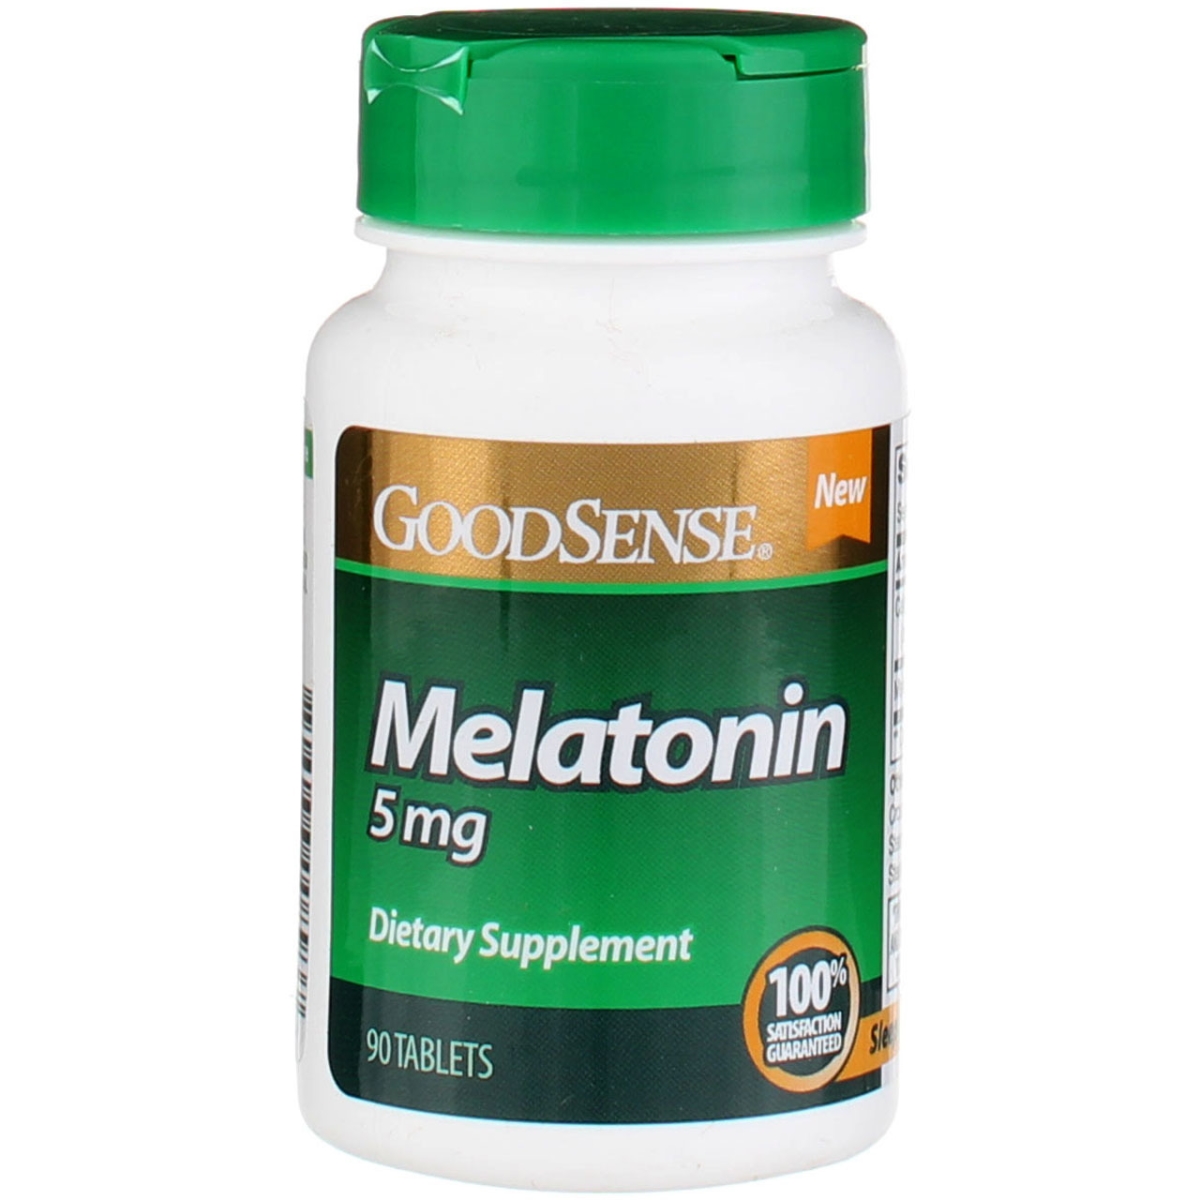 Good Sense 1902598 5 Mg Melatonin Dietary Supplement Tablets, 90 Count